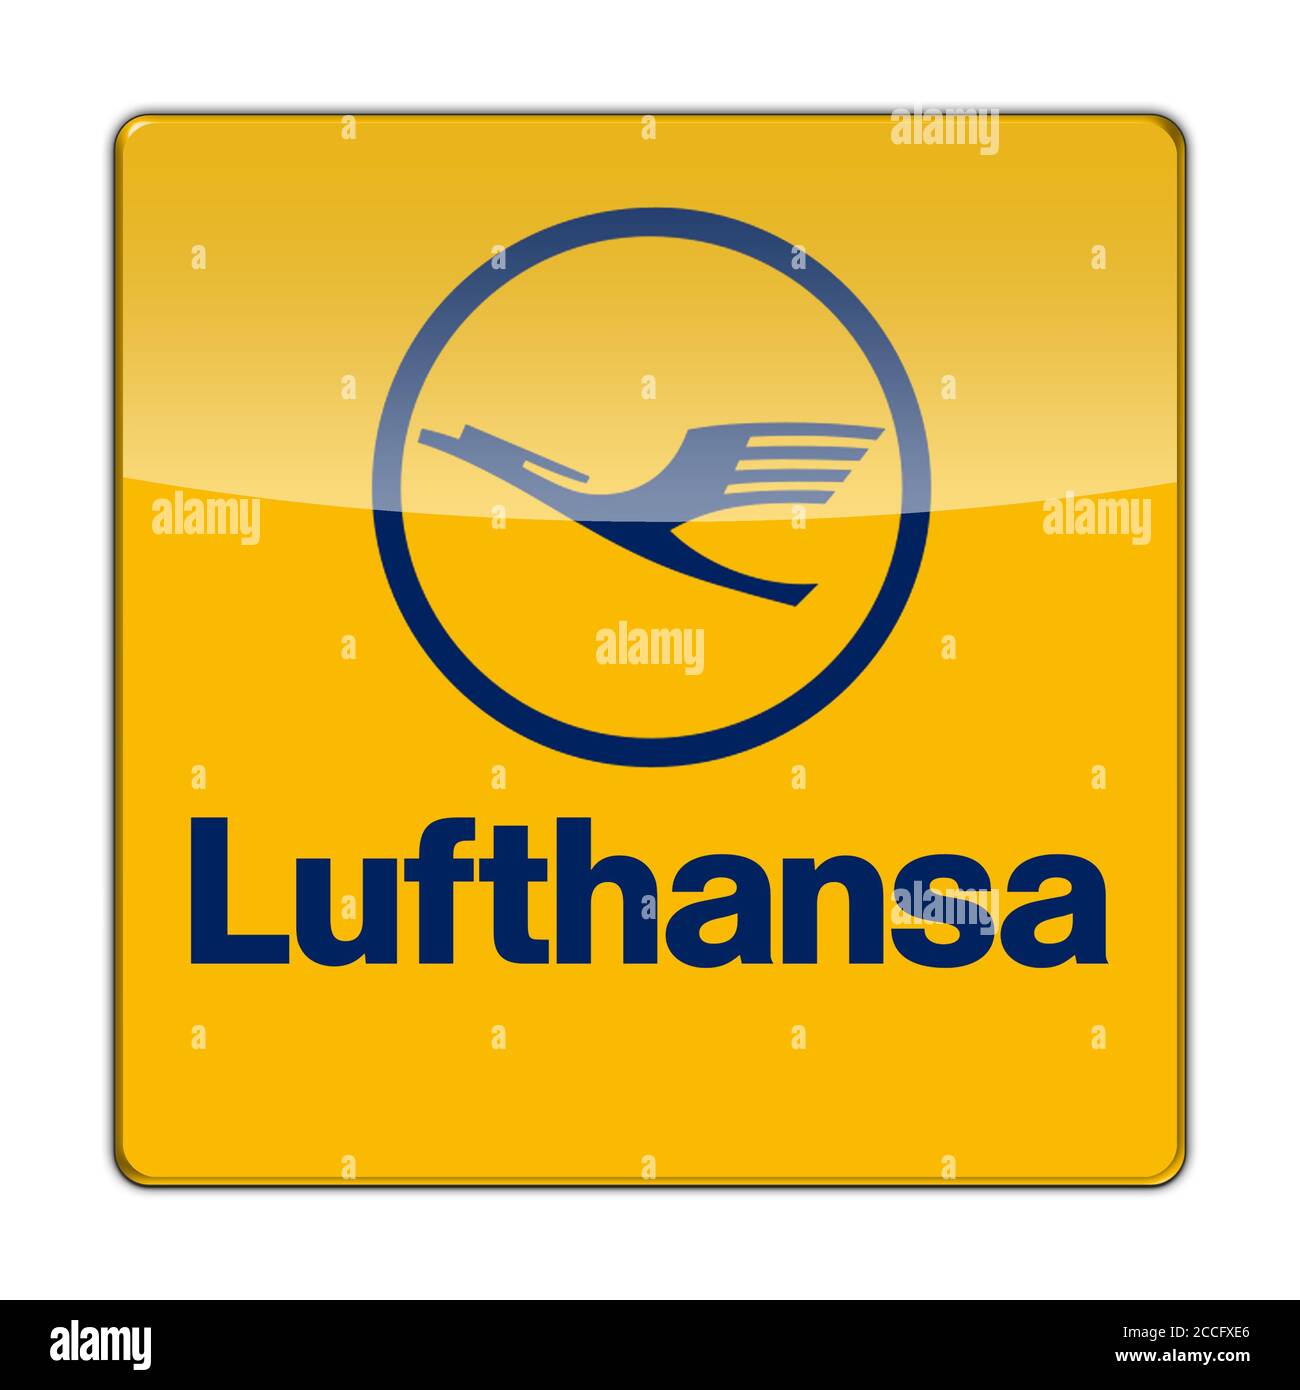 Lufthansa Airlines Stock Photo